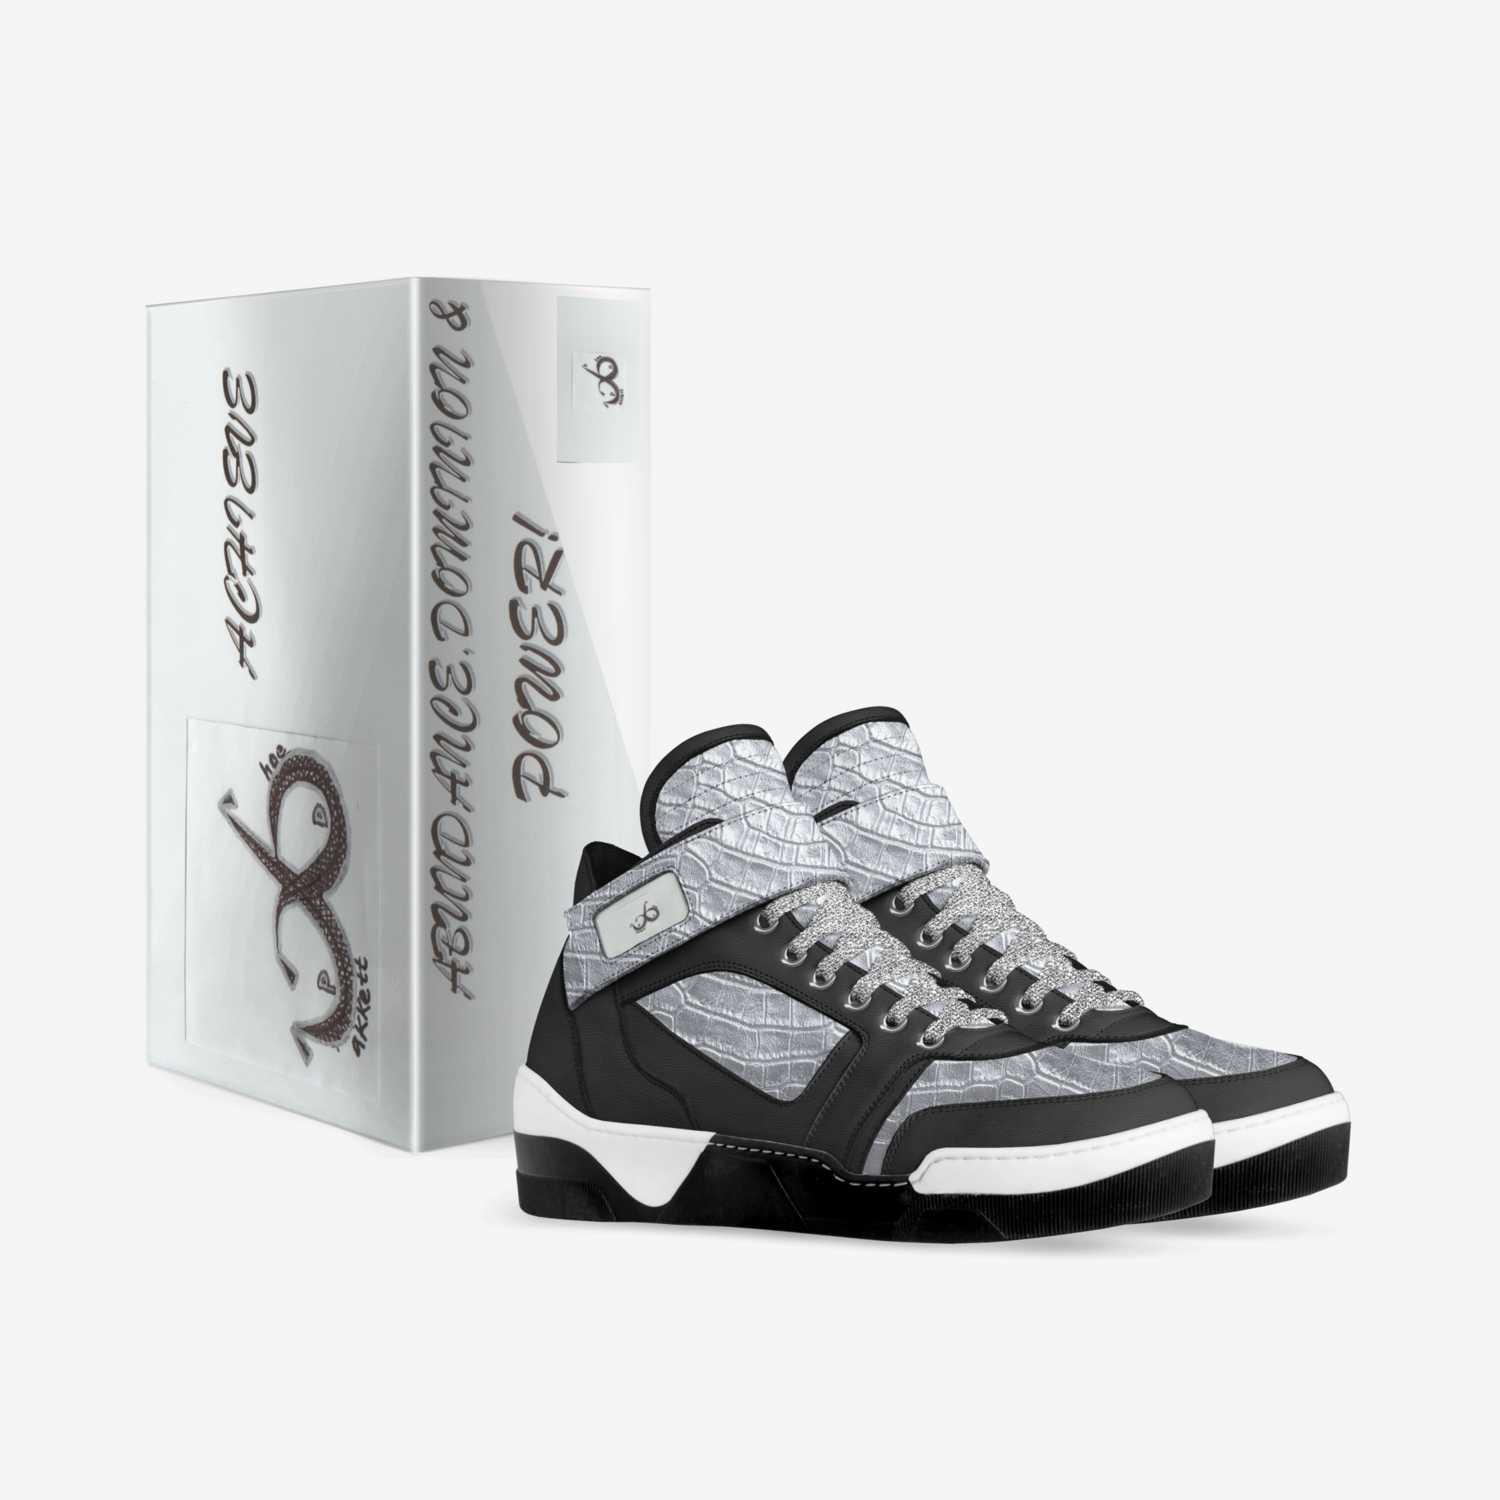 SHOE JAKKETT custom made in Italy shoes by Patsy Durr | Box view